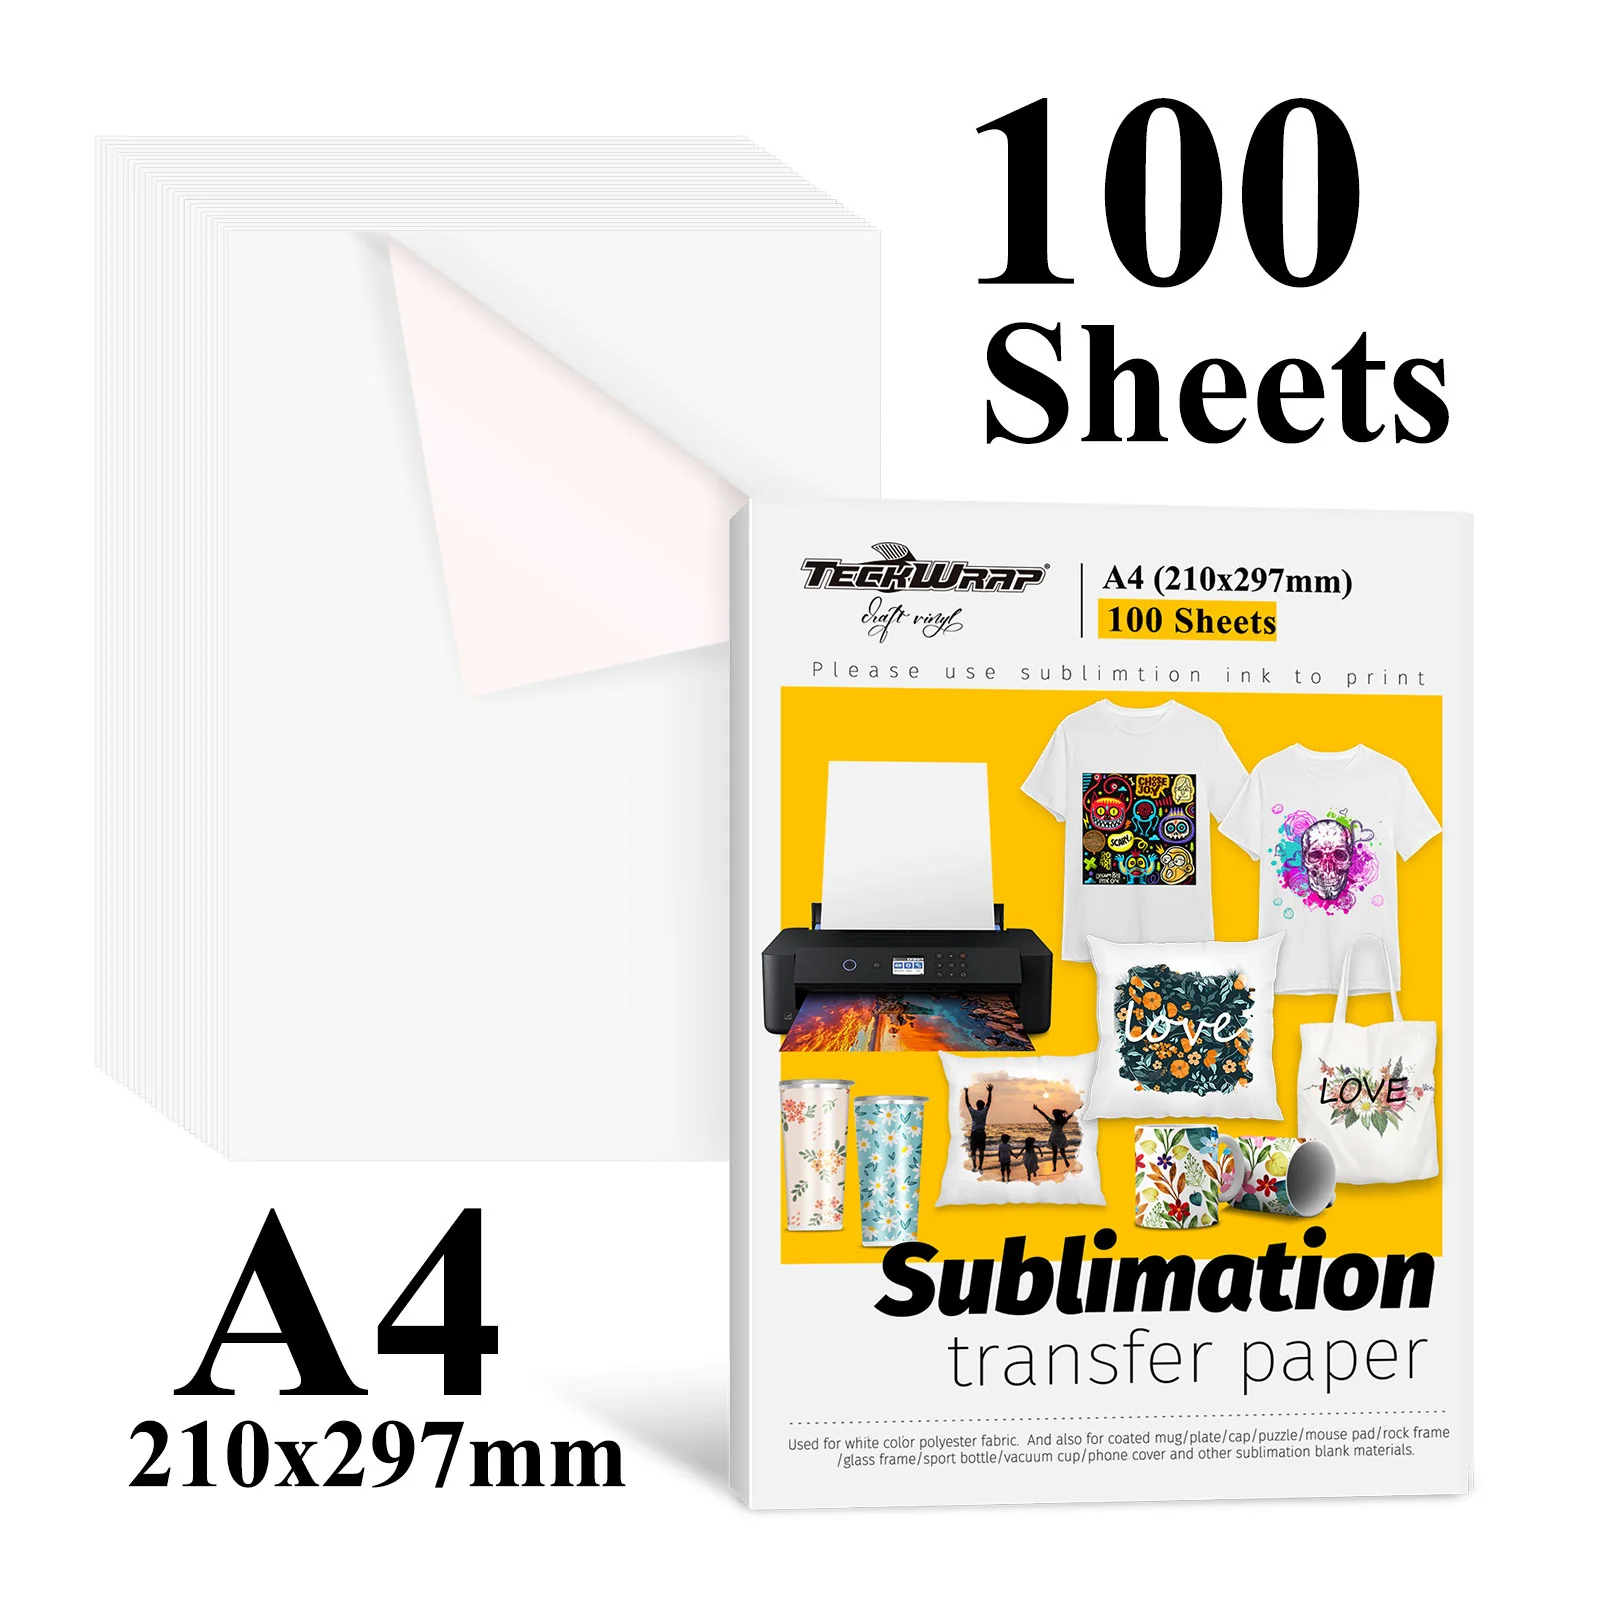 making custom pillows via sublimation paper